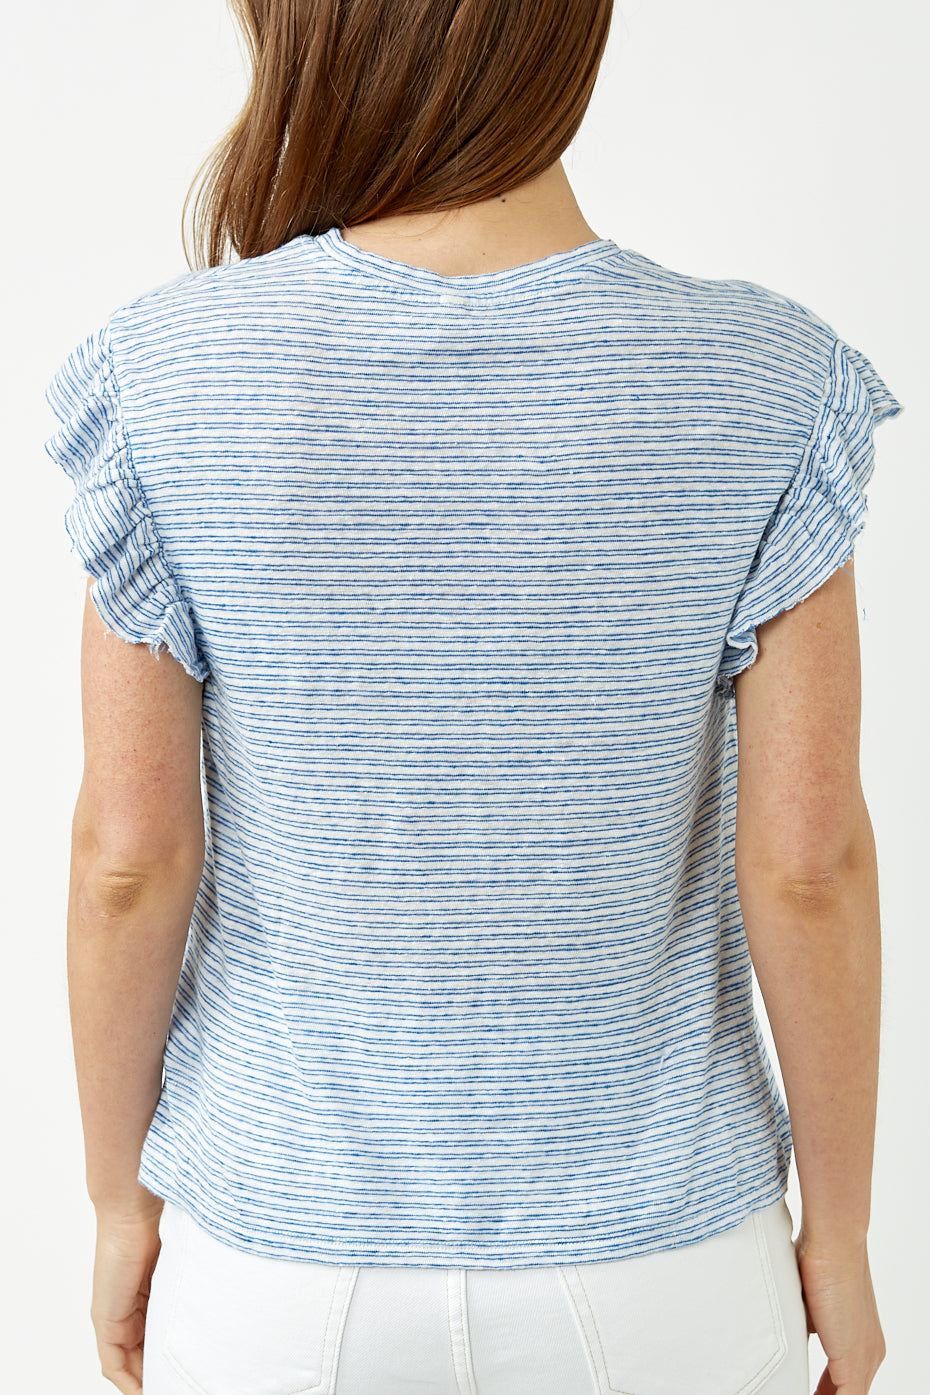 Stripe A Visam T-Shirt